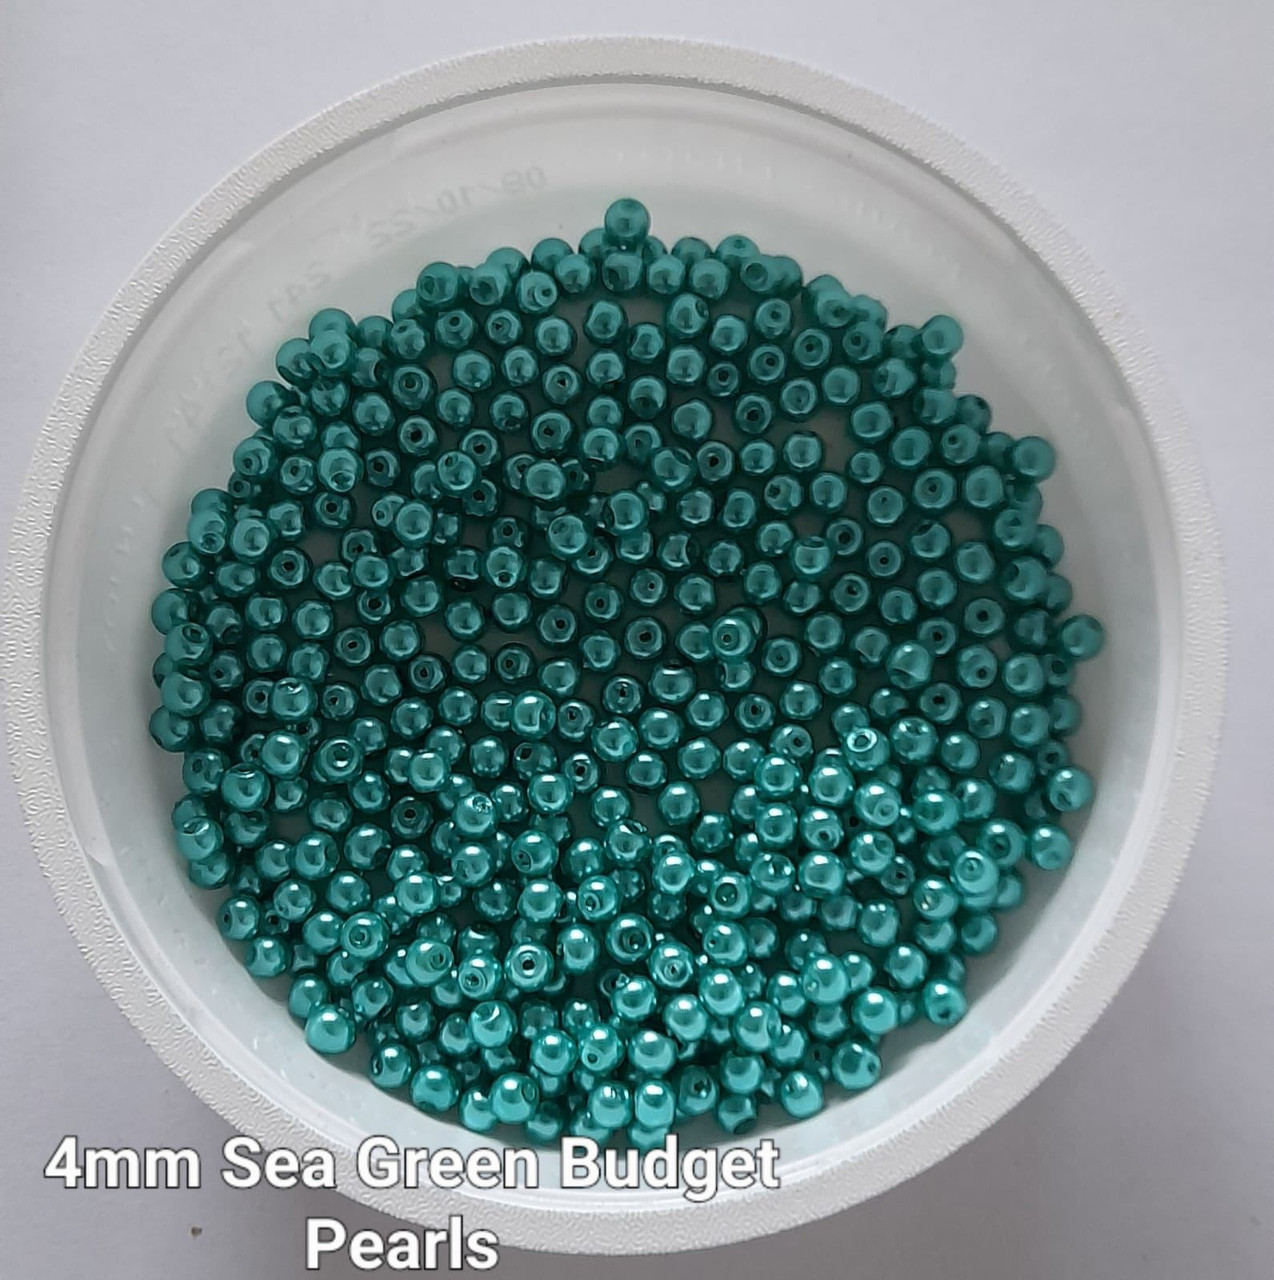 4mm budget Glass Pearls - Sea Green (500 beads)